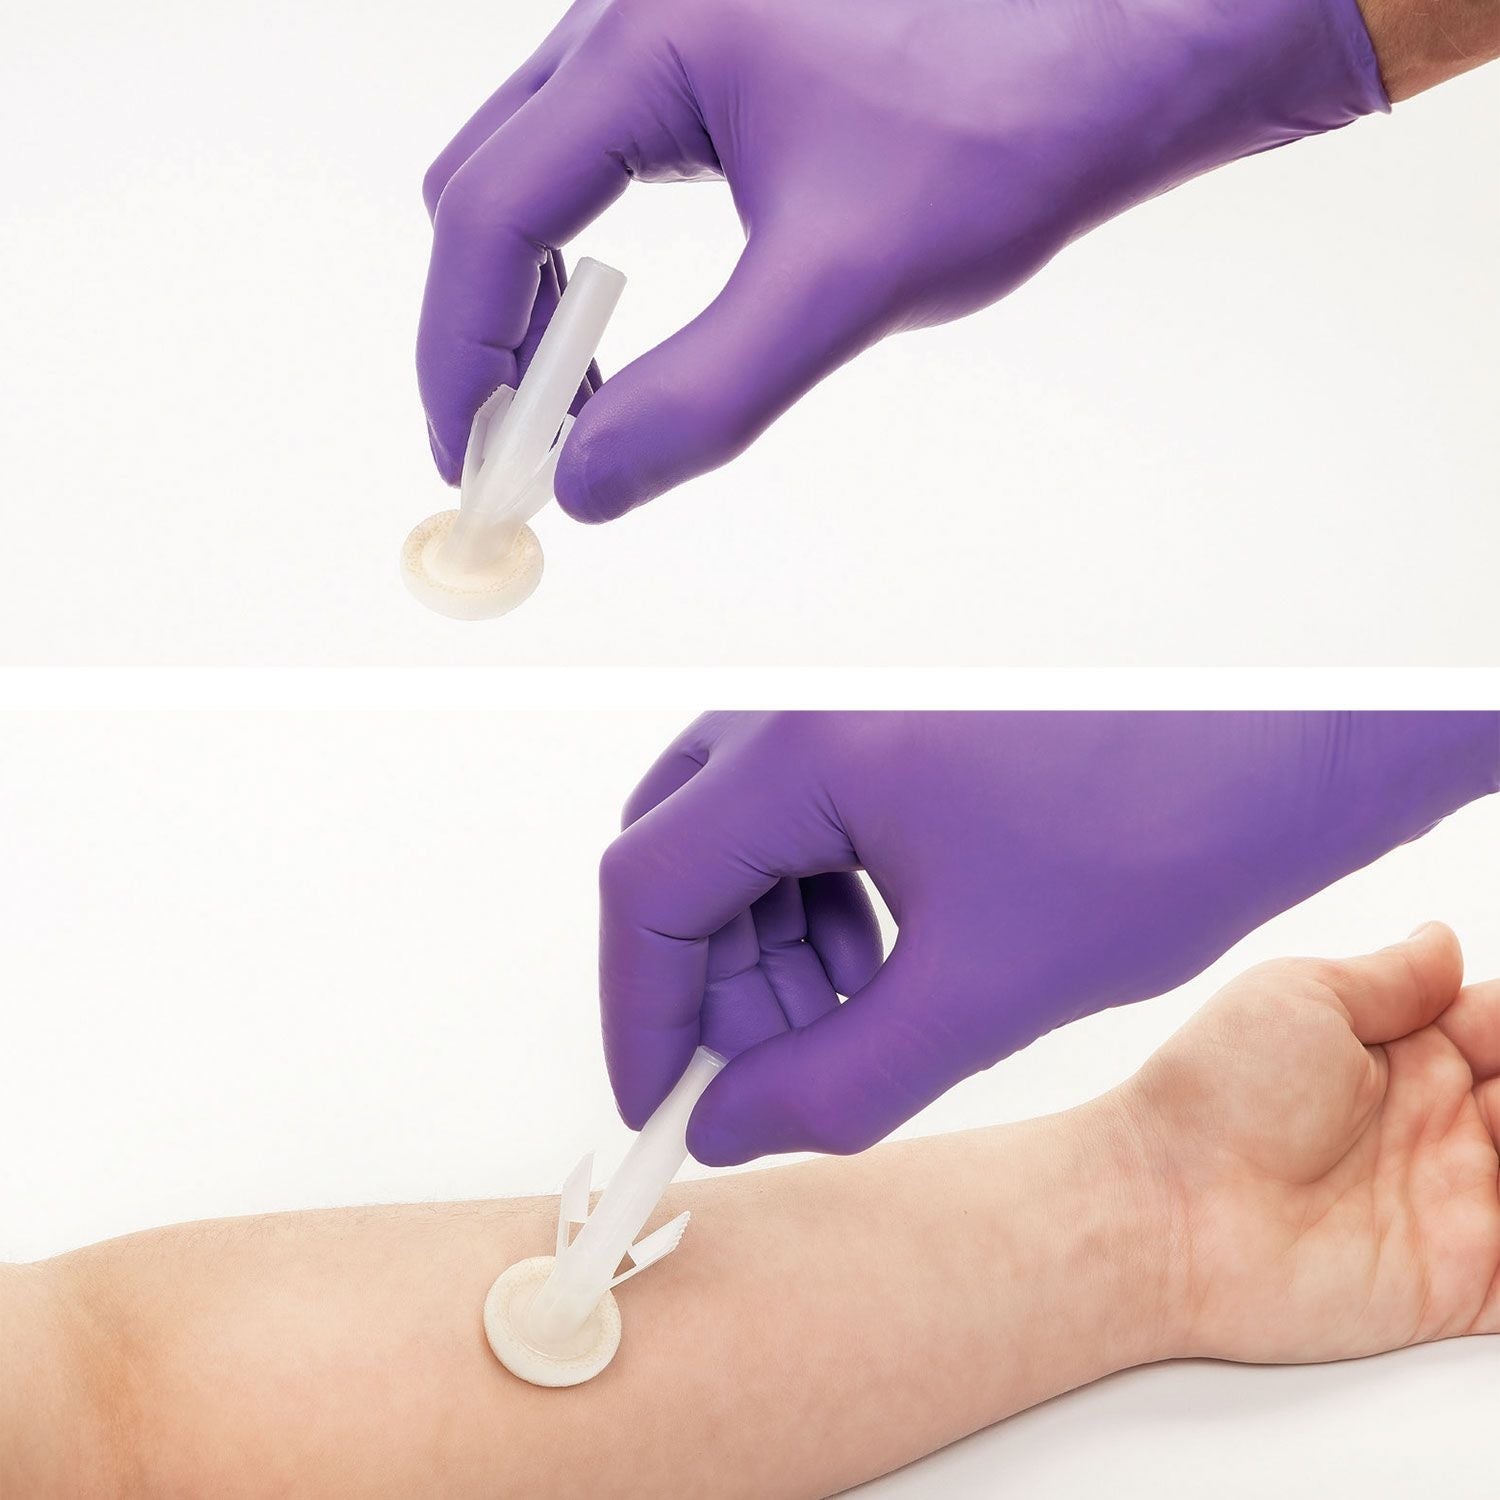 ChloraPrep Patient Preoperative Skin Preparation Applicator | Tinted | 3ml | Pack of 25